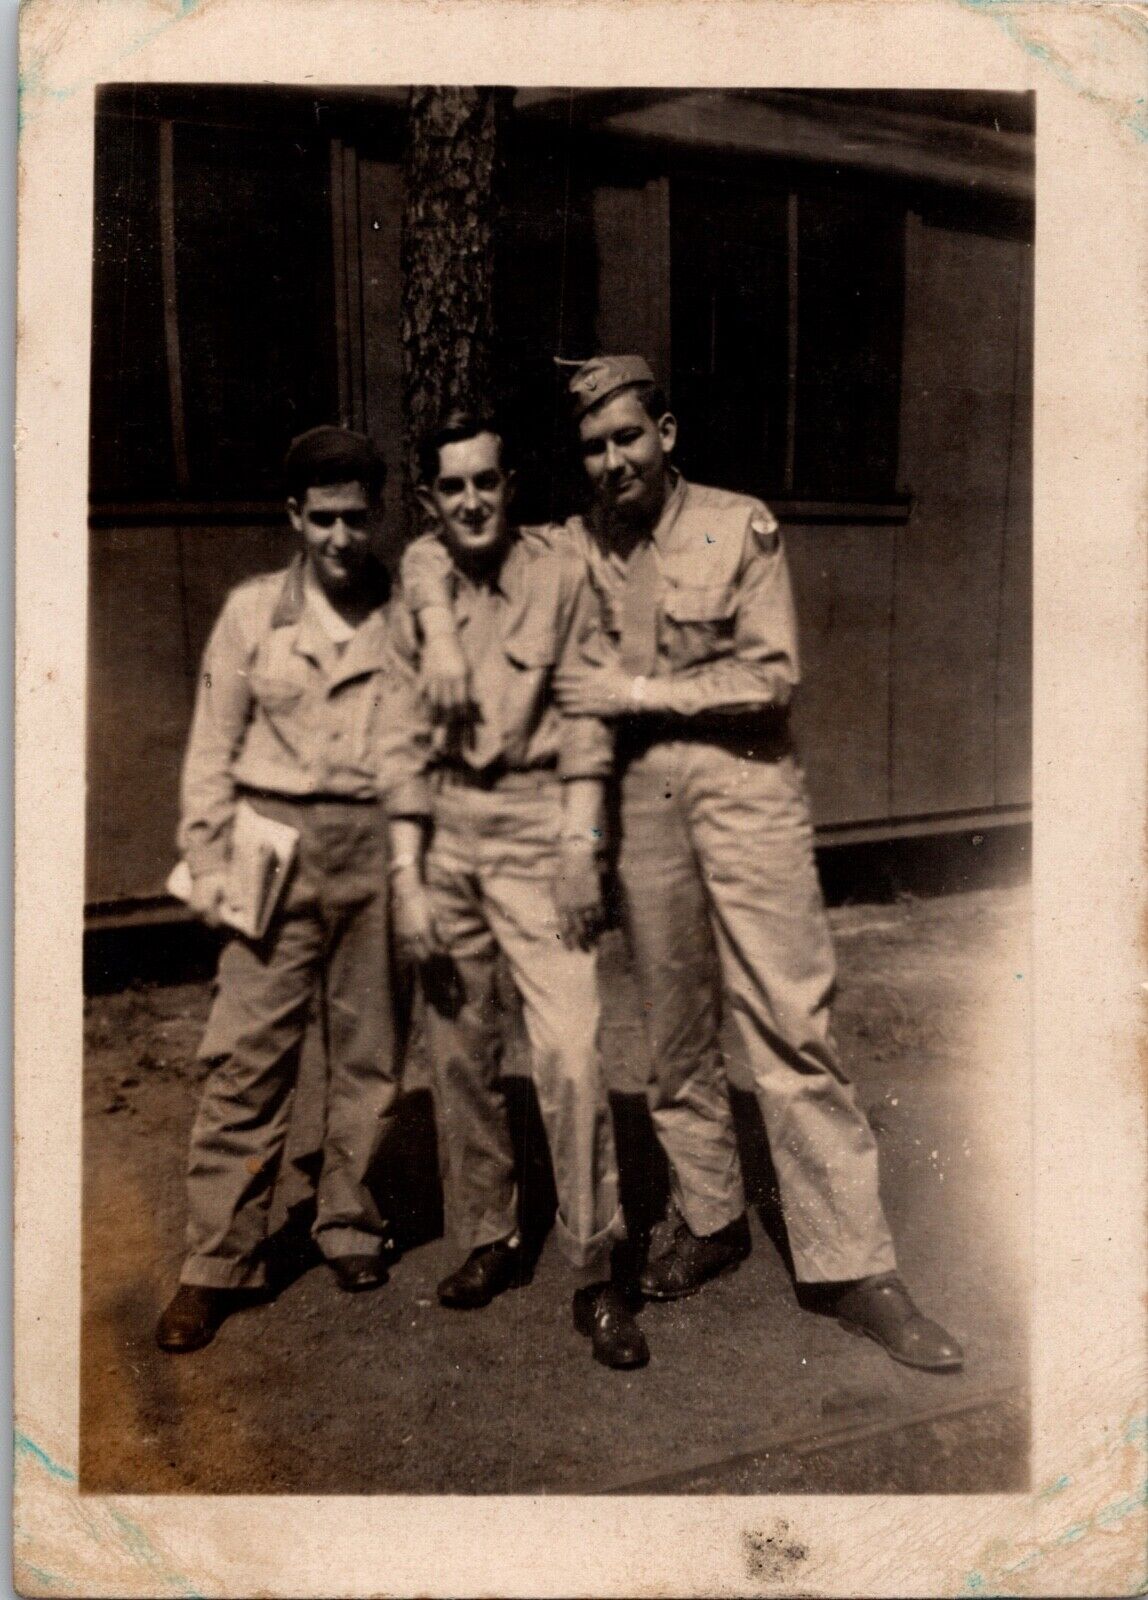 Vtg Found B&W Photo WW2 US Army Soldiers Military Men Friends Uniform Snapshot